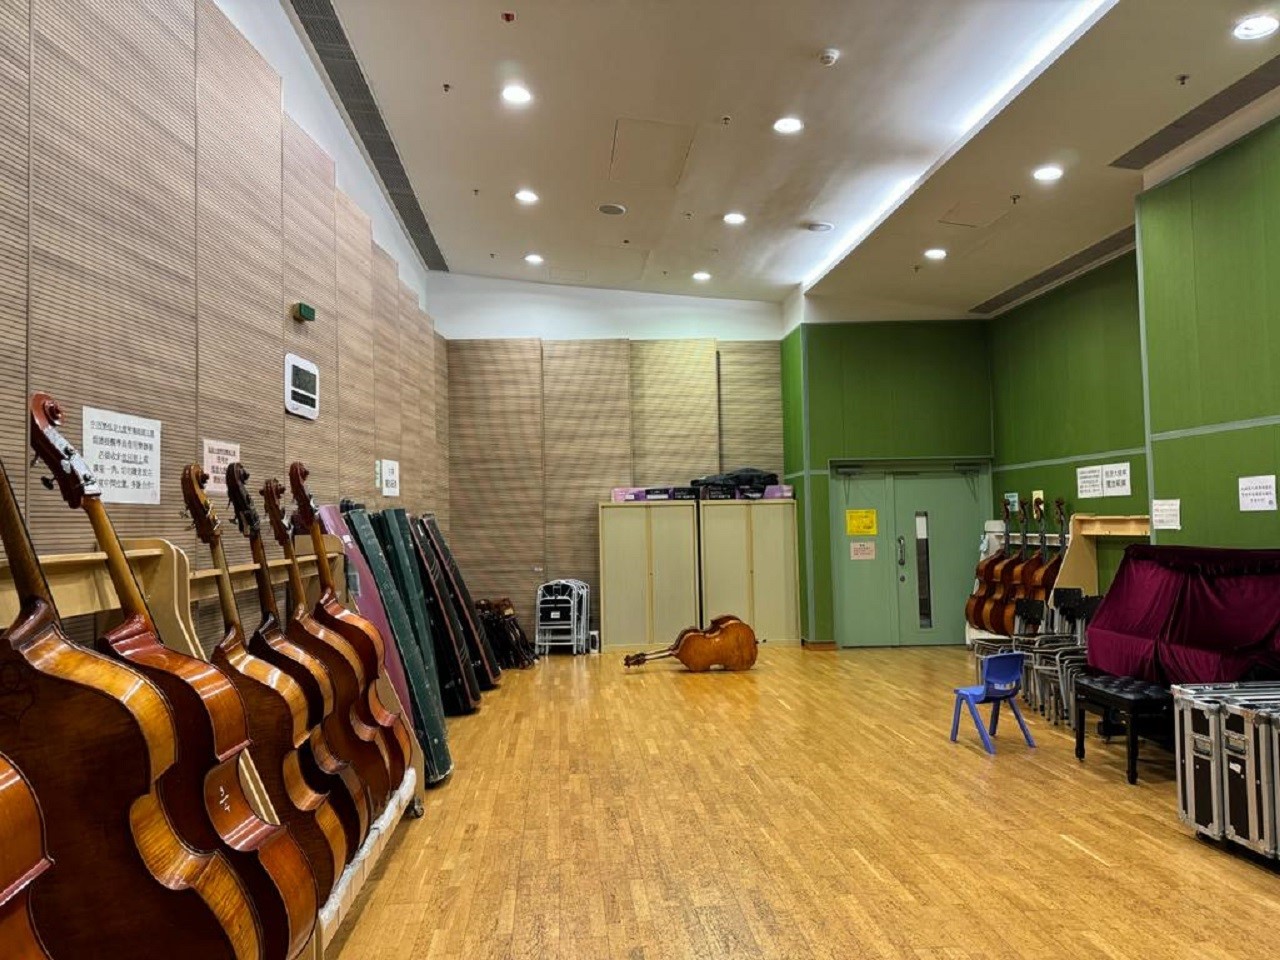 Photo 3: Music Office (Kwun Tong Music Centre)